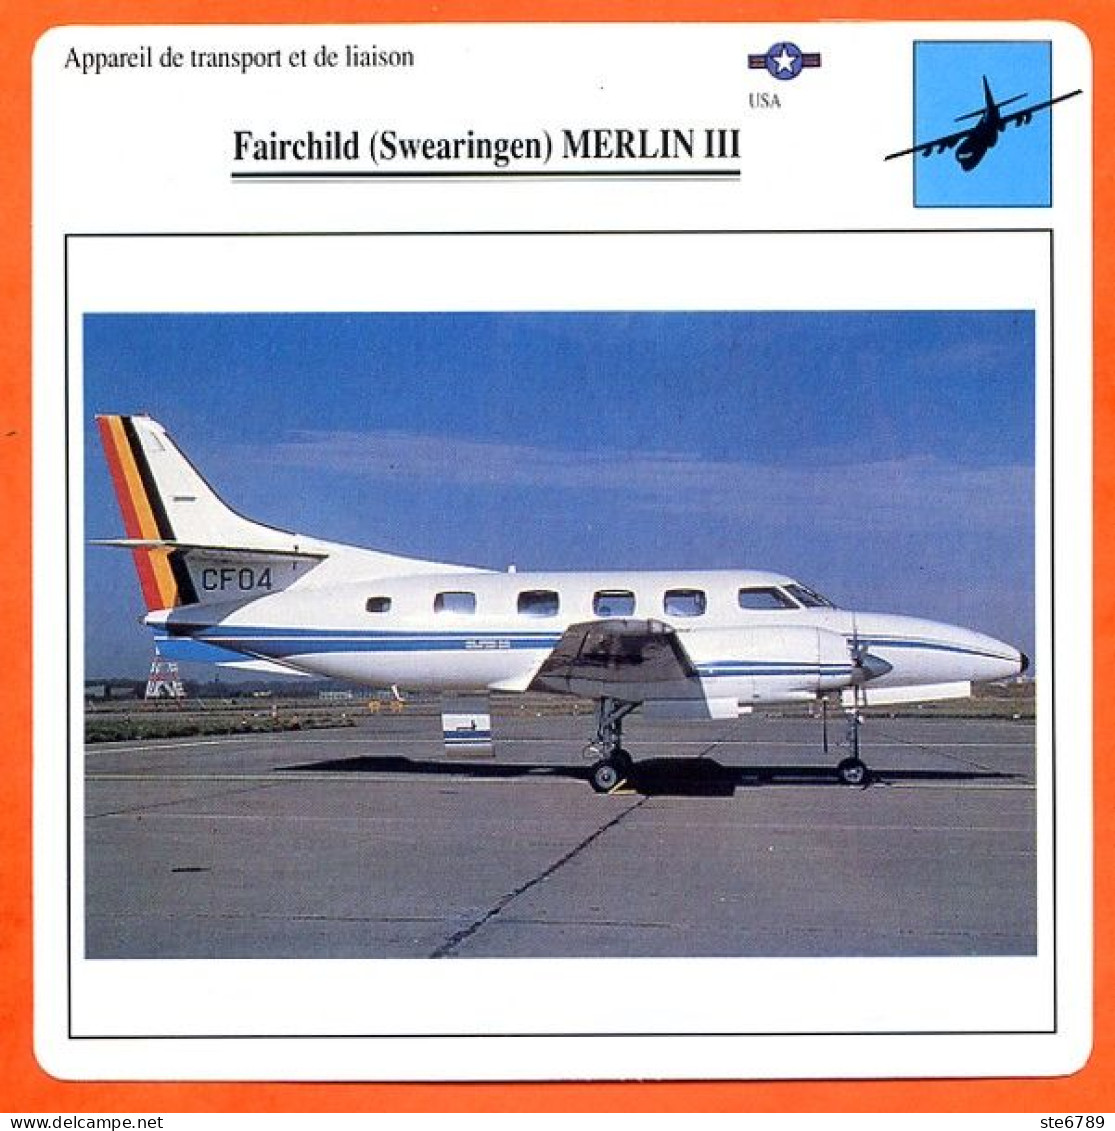 Fiche Aviation Fairchild Swearingen MERLIN III / Avion Transport Et Liaison USA Avions - Flugzeuge